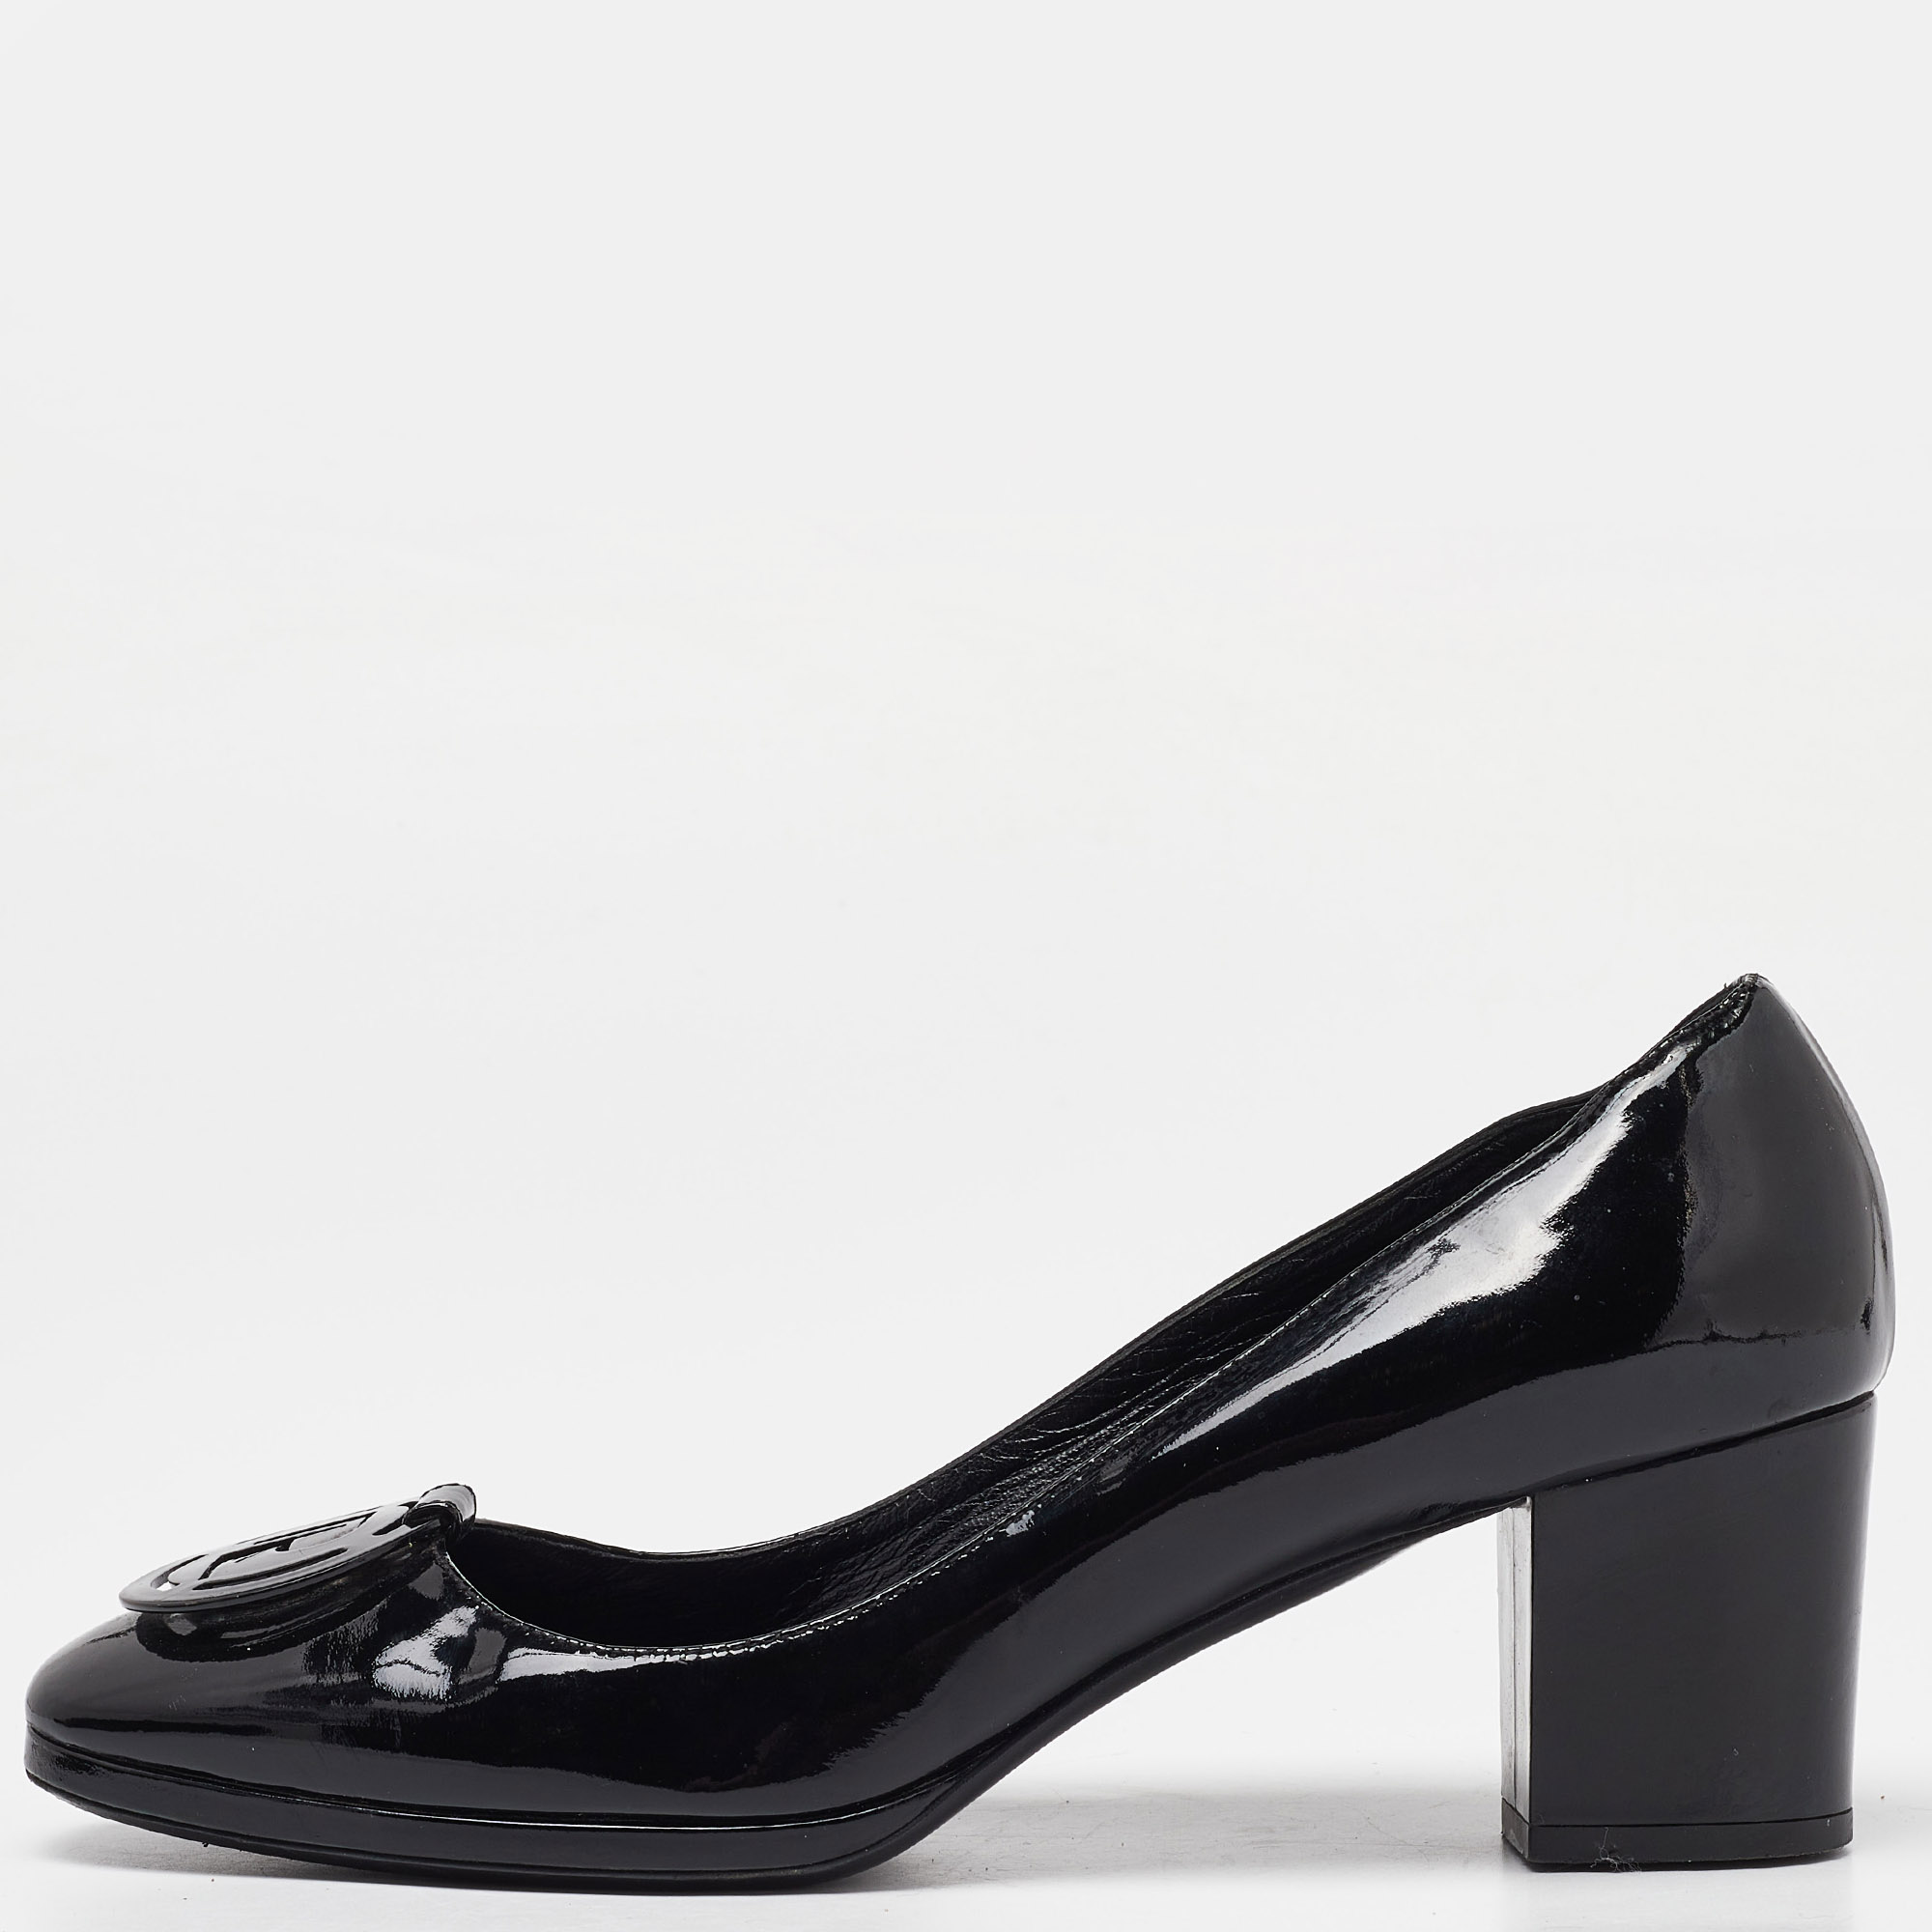 Ralph lauren collection black patent leather block heel pumps size 40